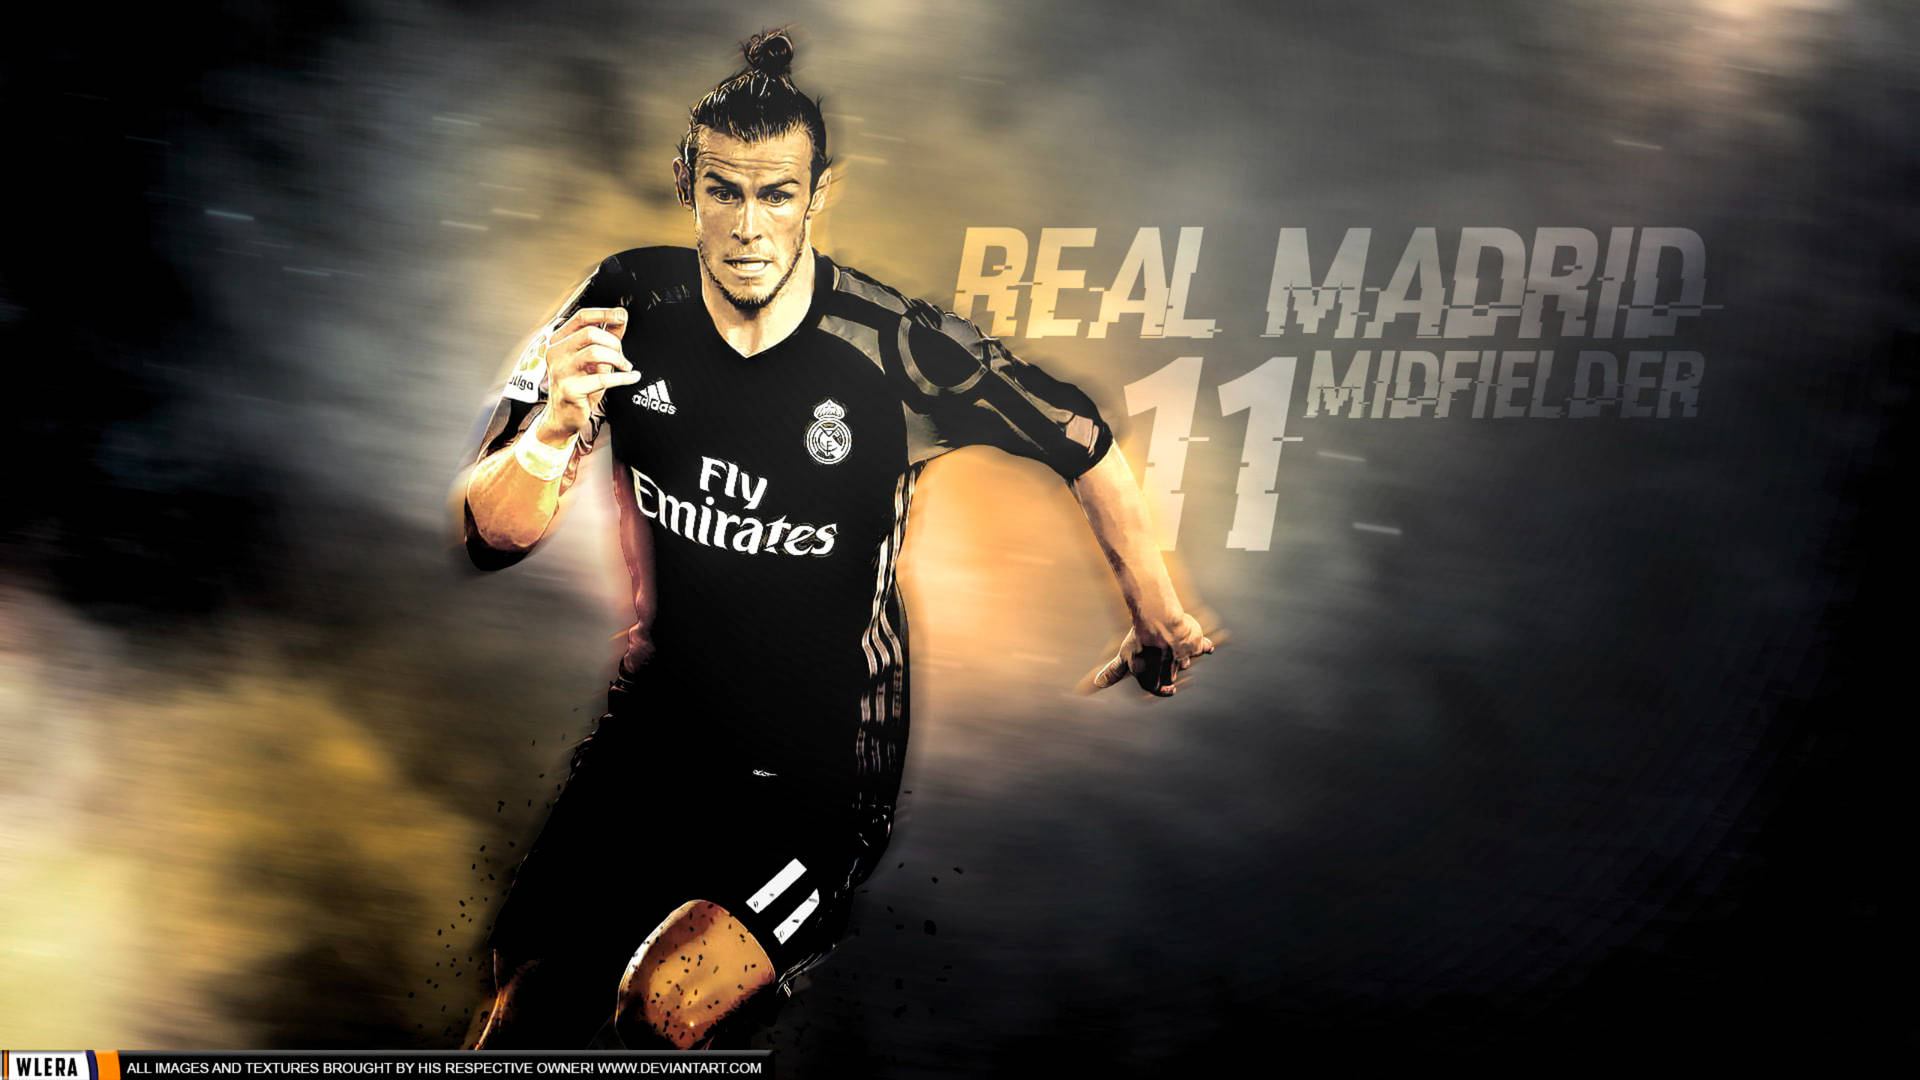 Gareth Bale Real Madrid Midfielder Poster